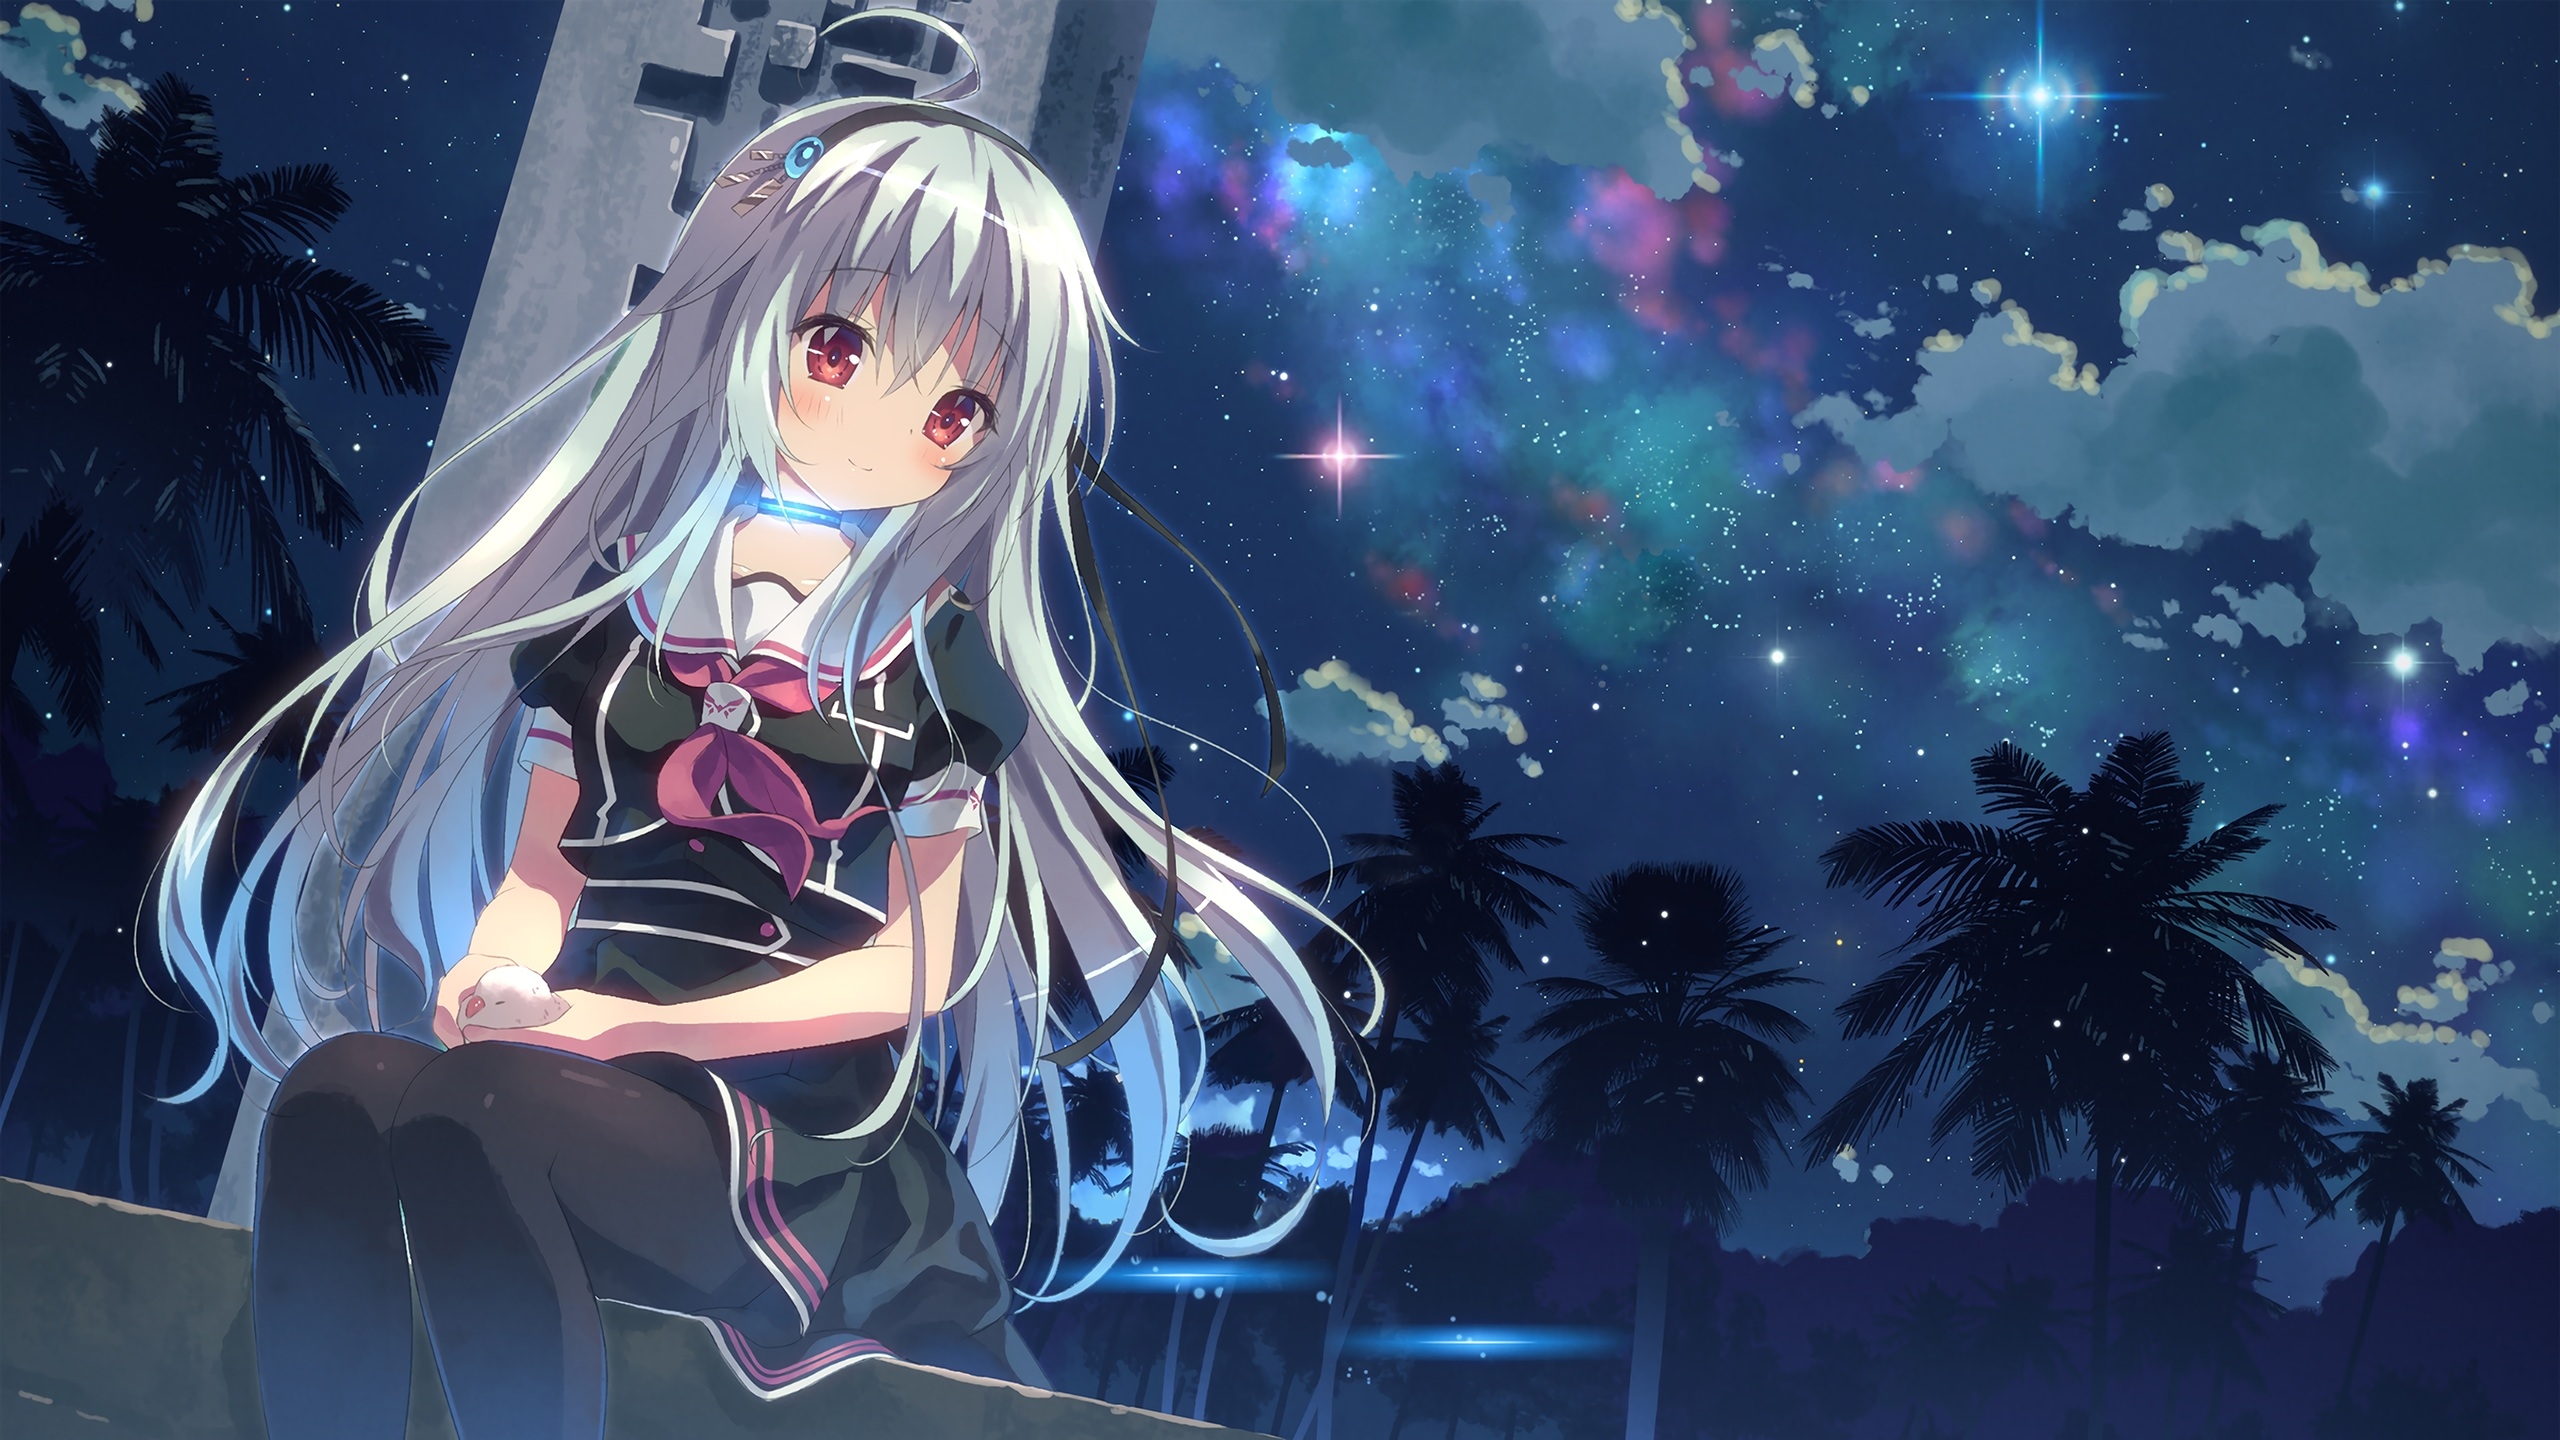 Anime girl against the starry sky.